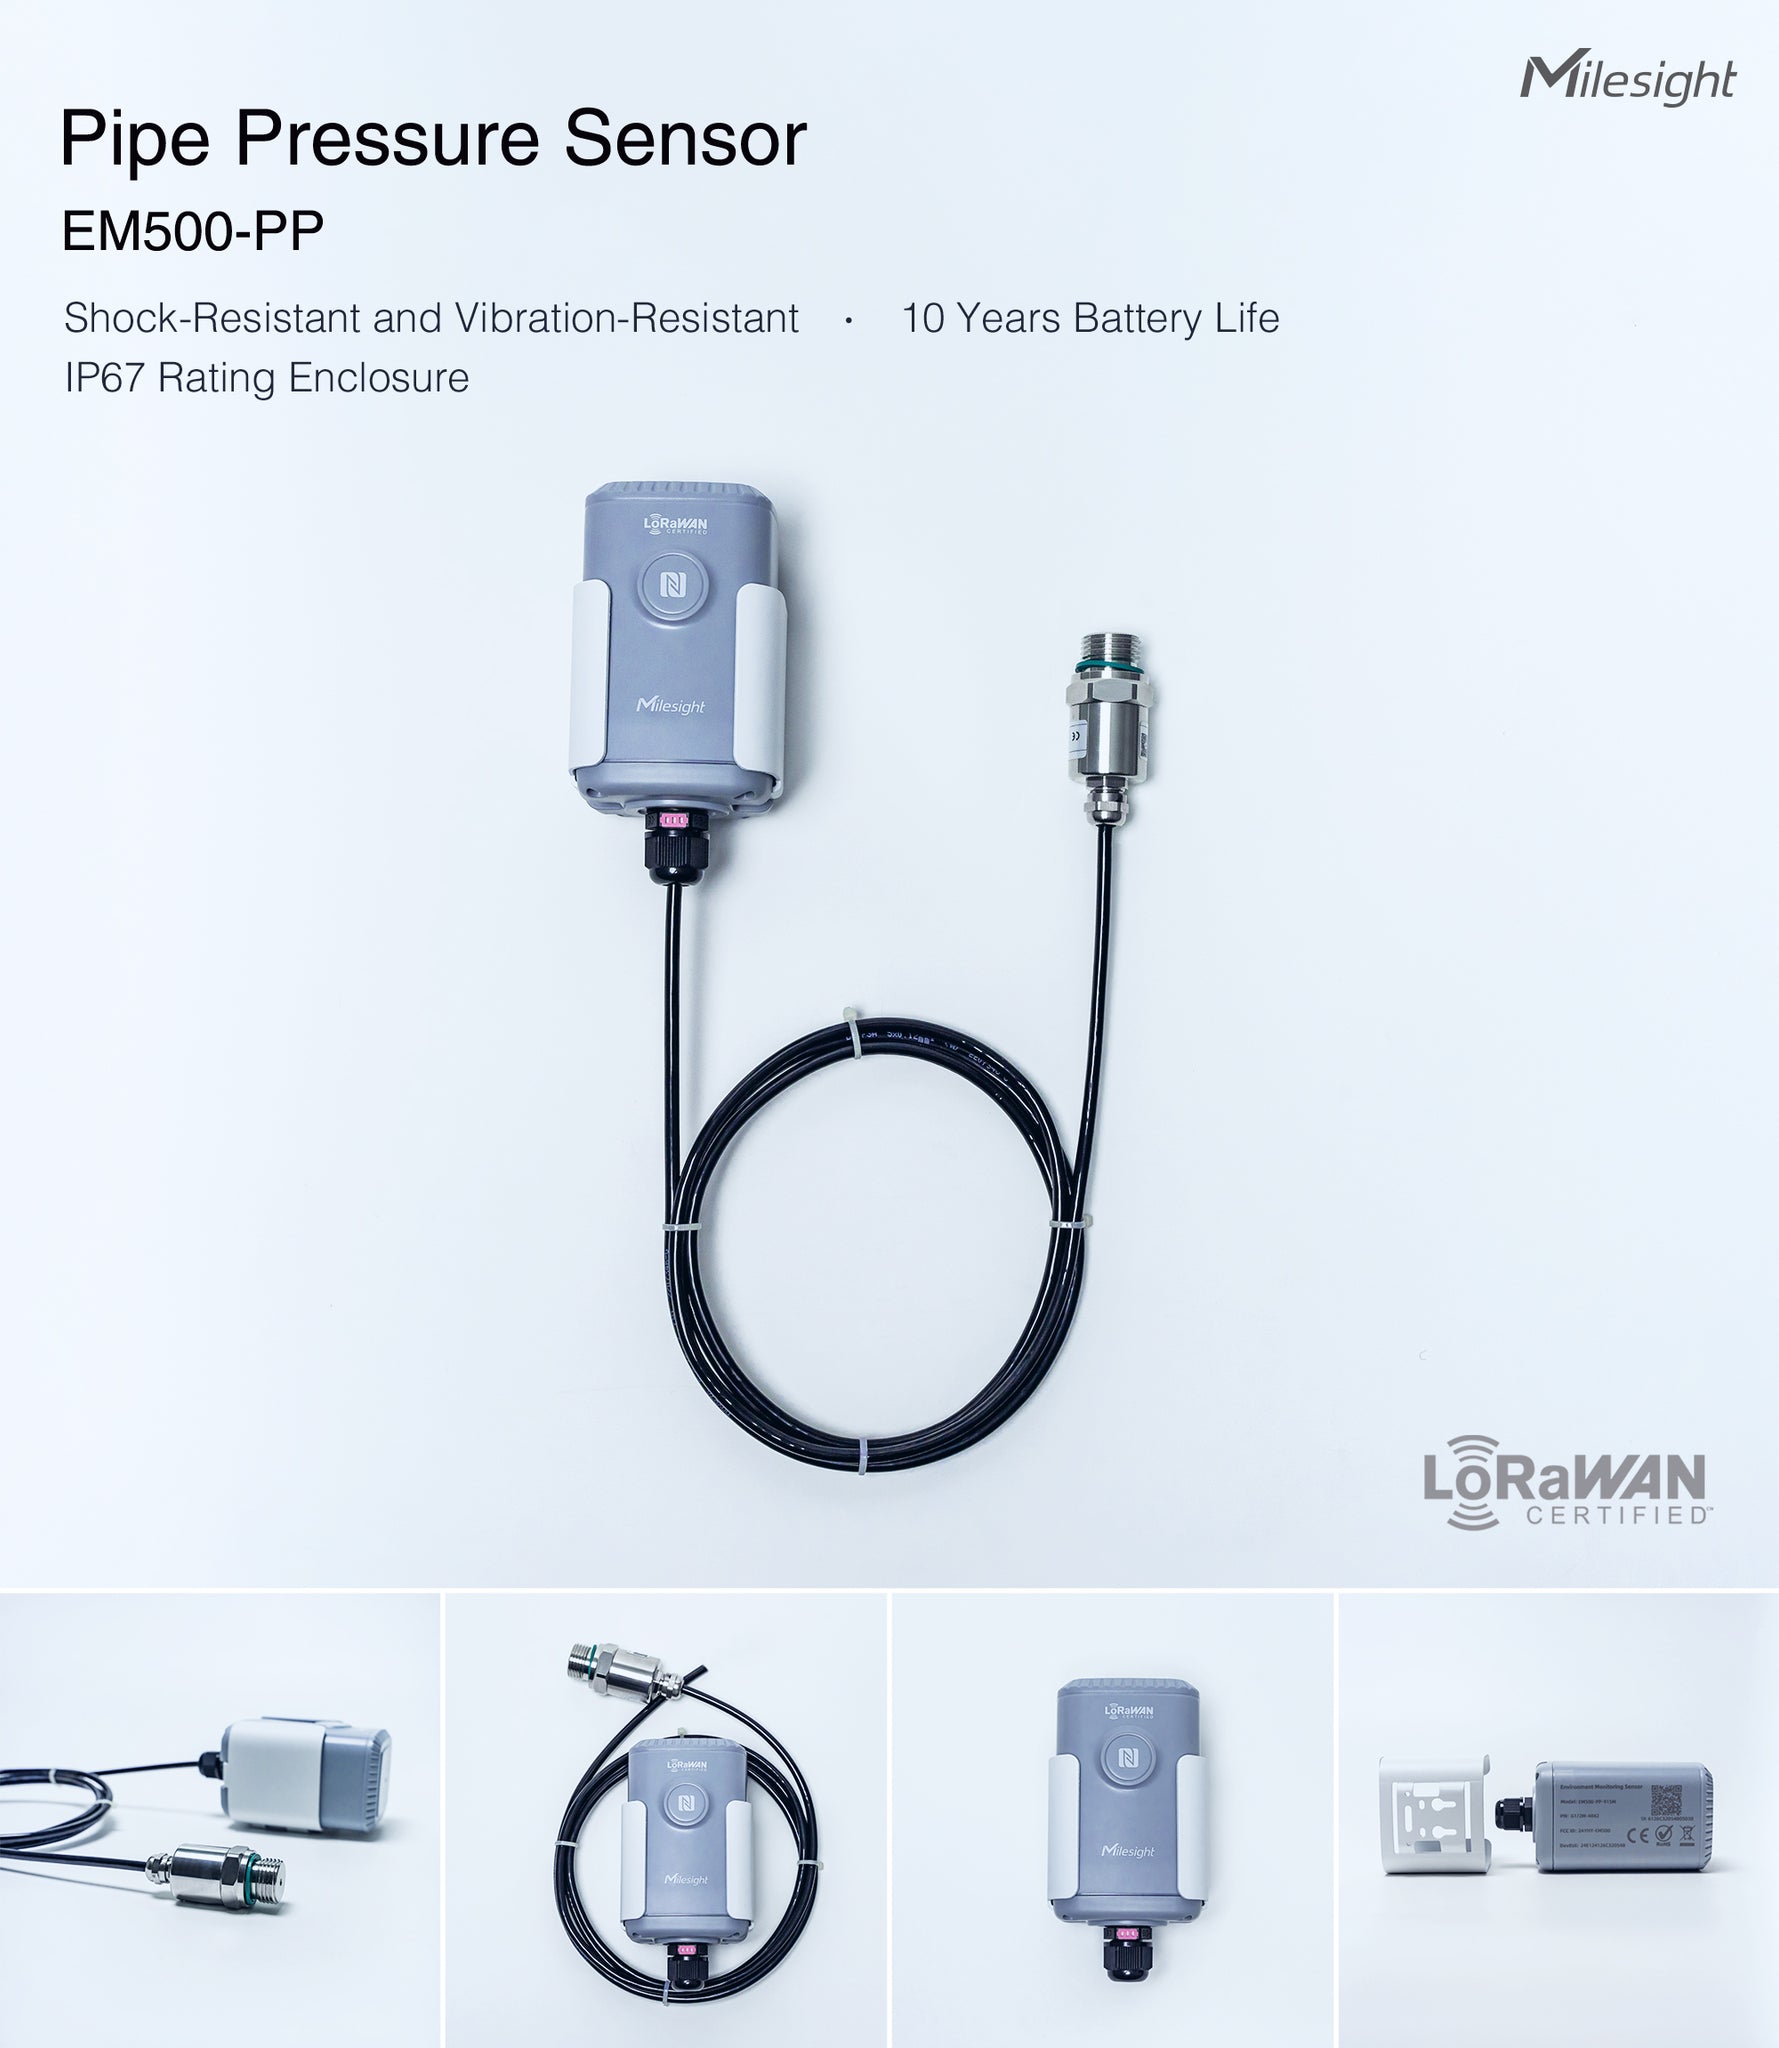 Milesight Pipe Pressure Sensor EM500-PP